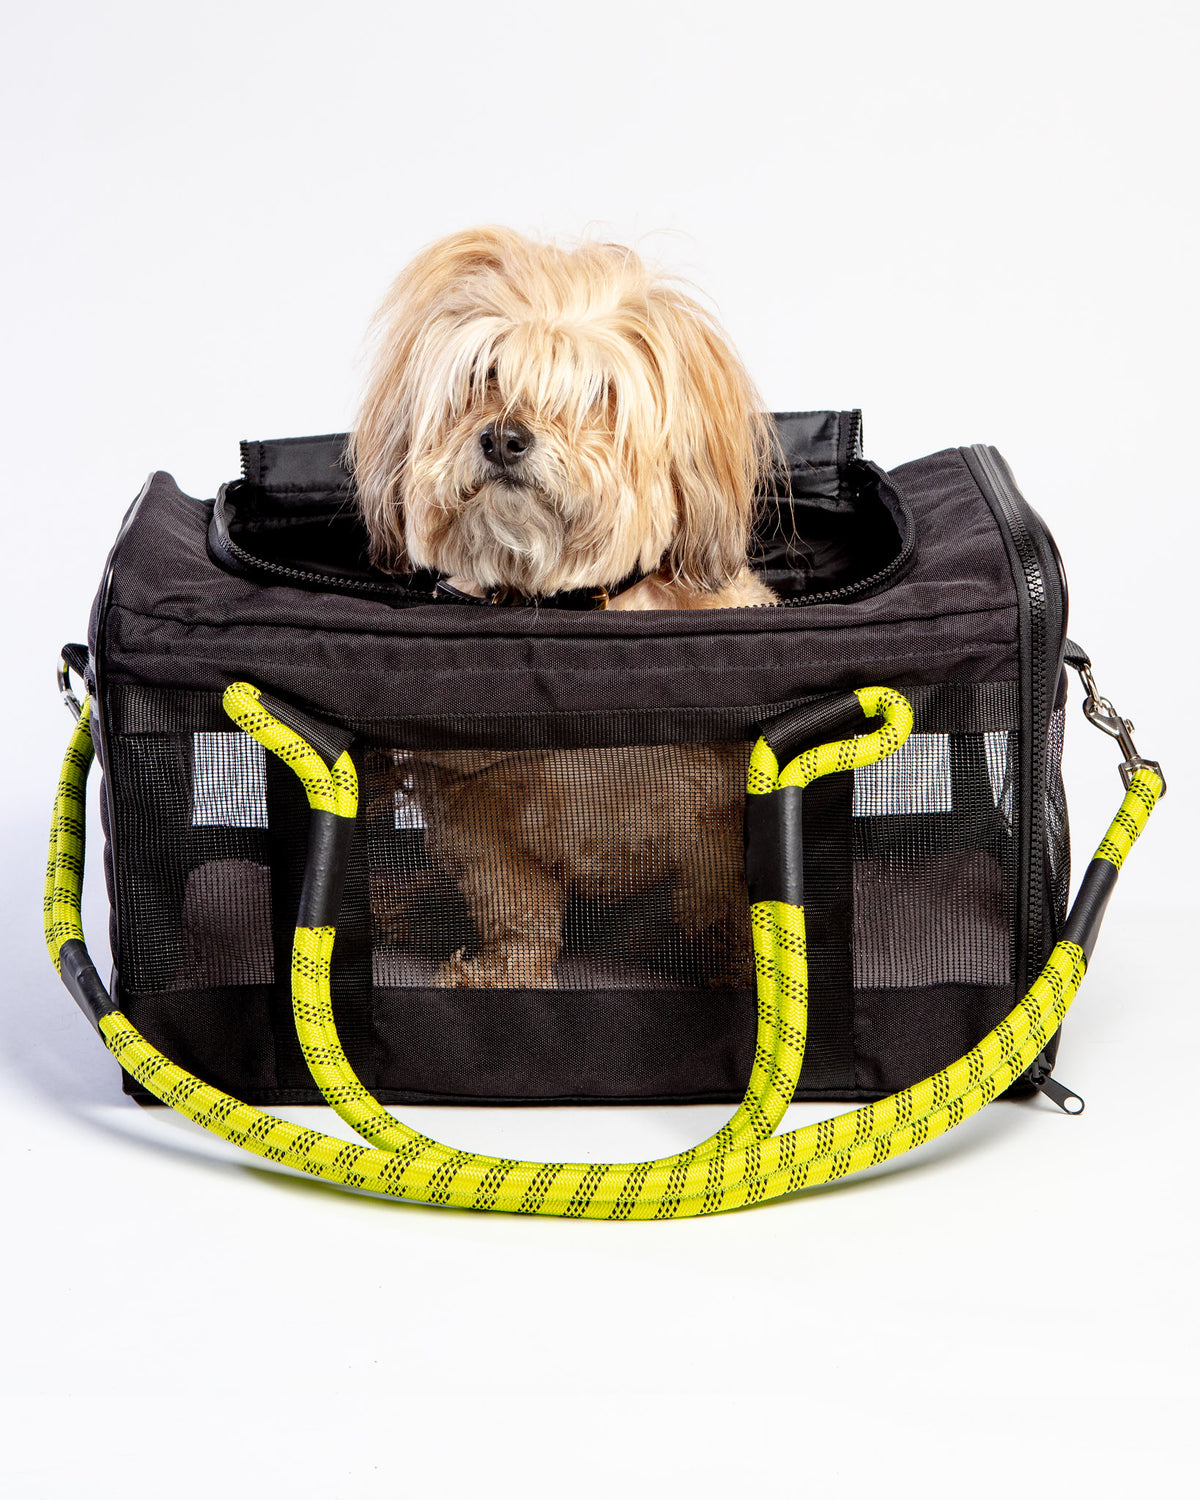 ROVERLUND Dog Tote Bag, Black/Magenta, Small